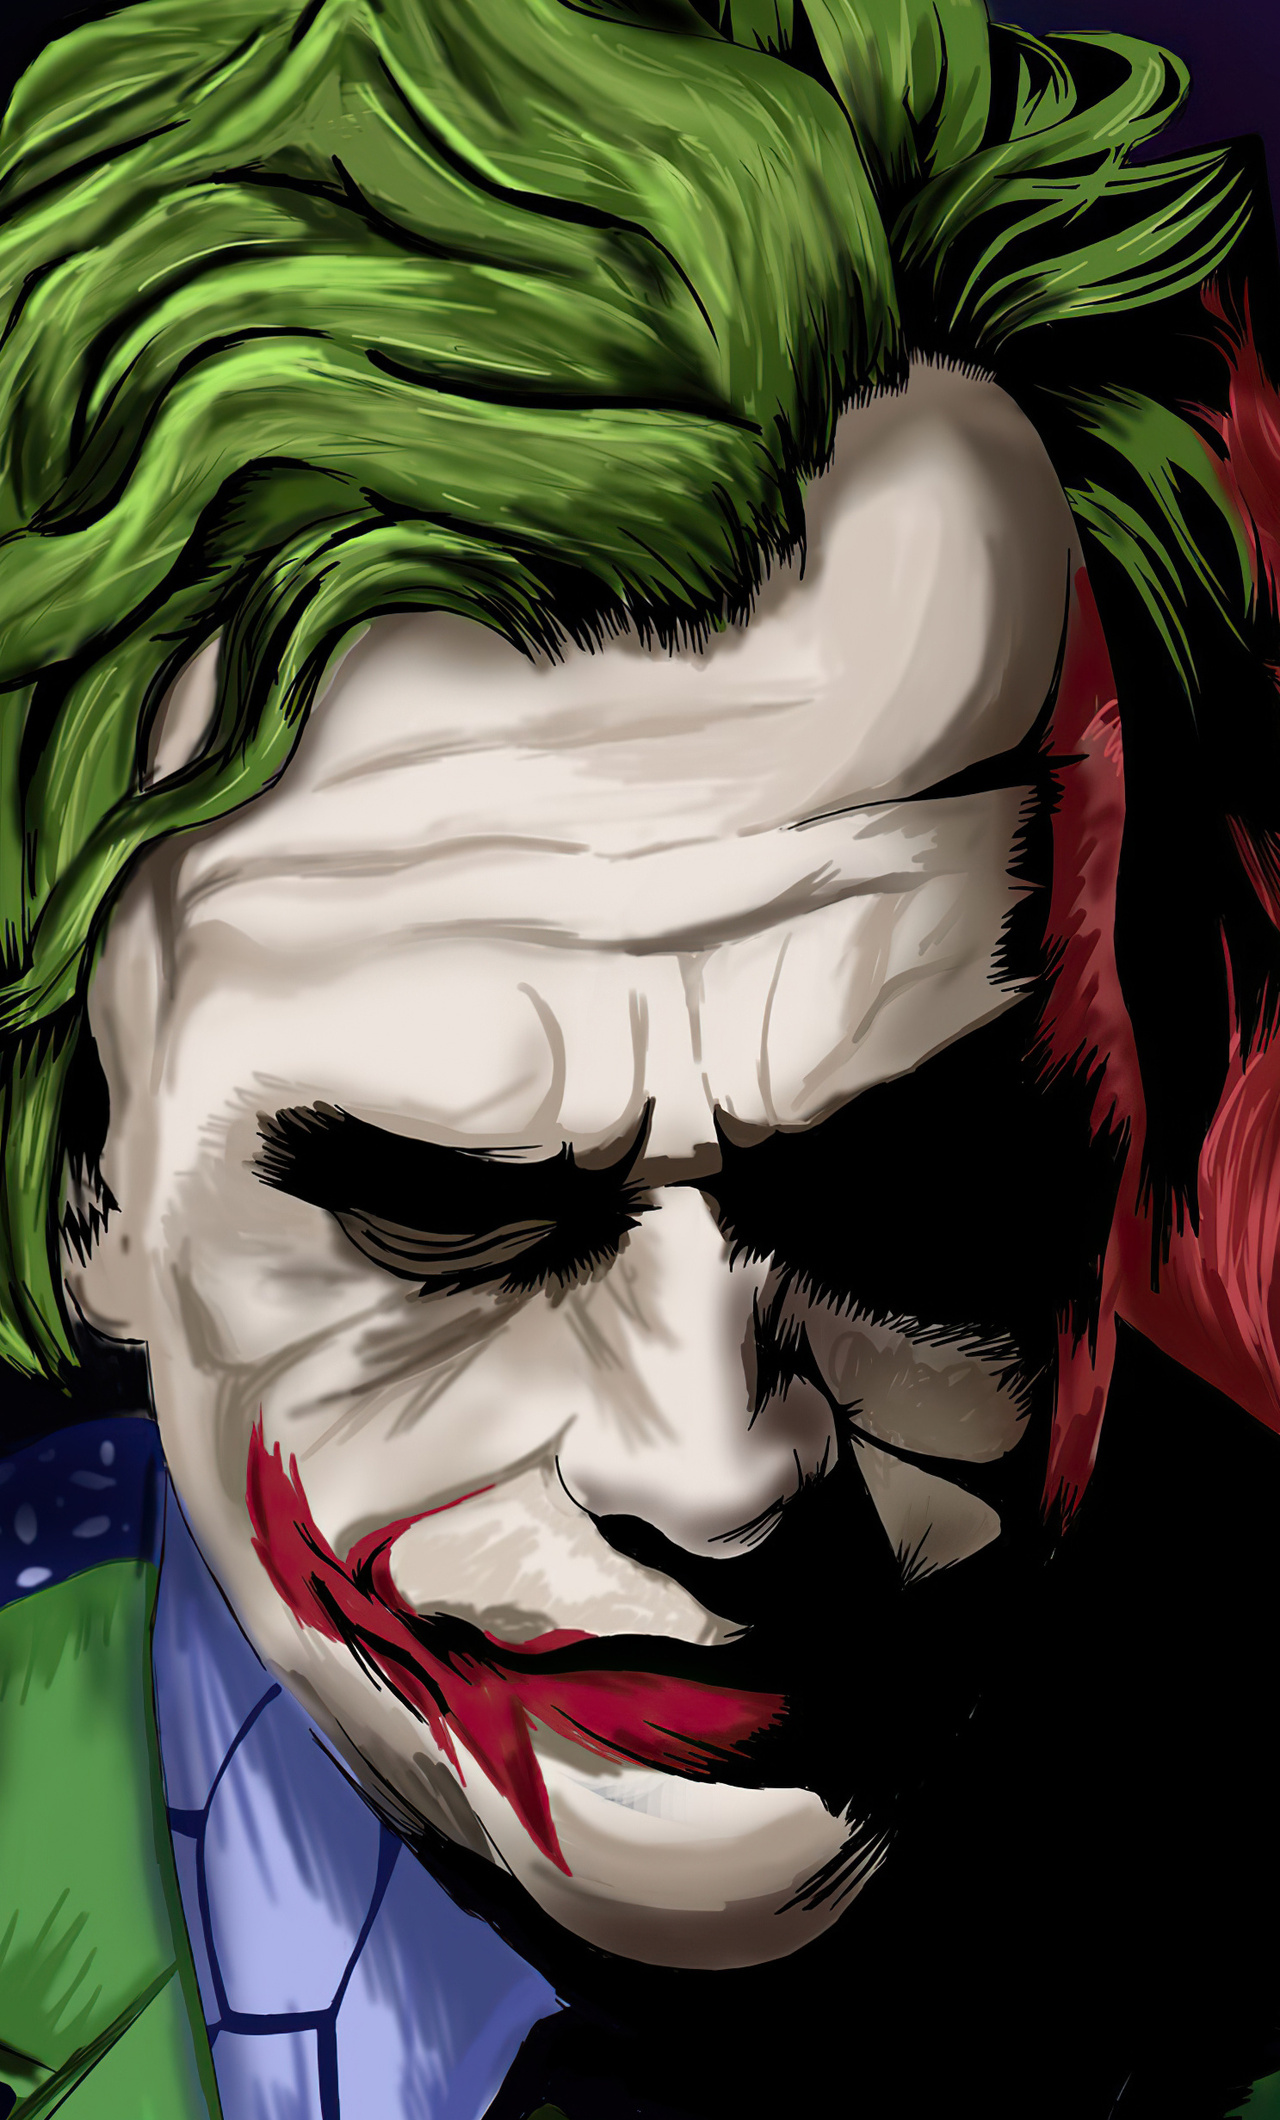 1280x2120 Joker Colorful Artwork 4k iPhone 6+ ,HD 4k Wallpapers,Images ...